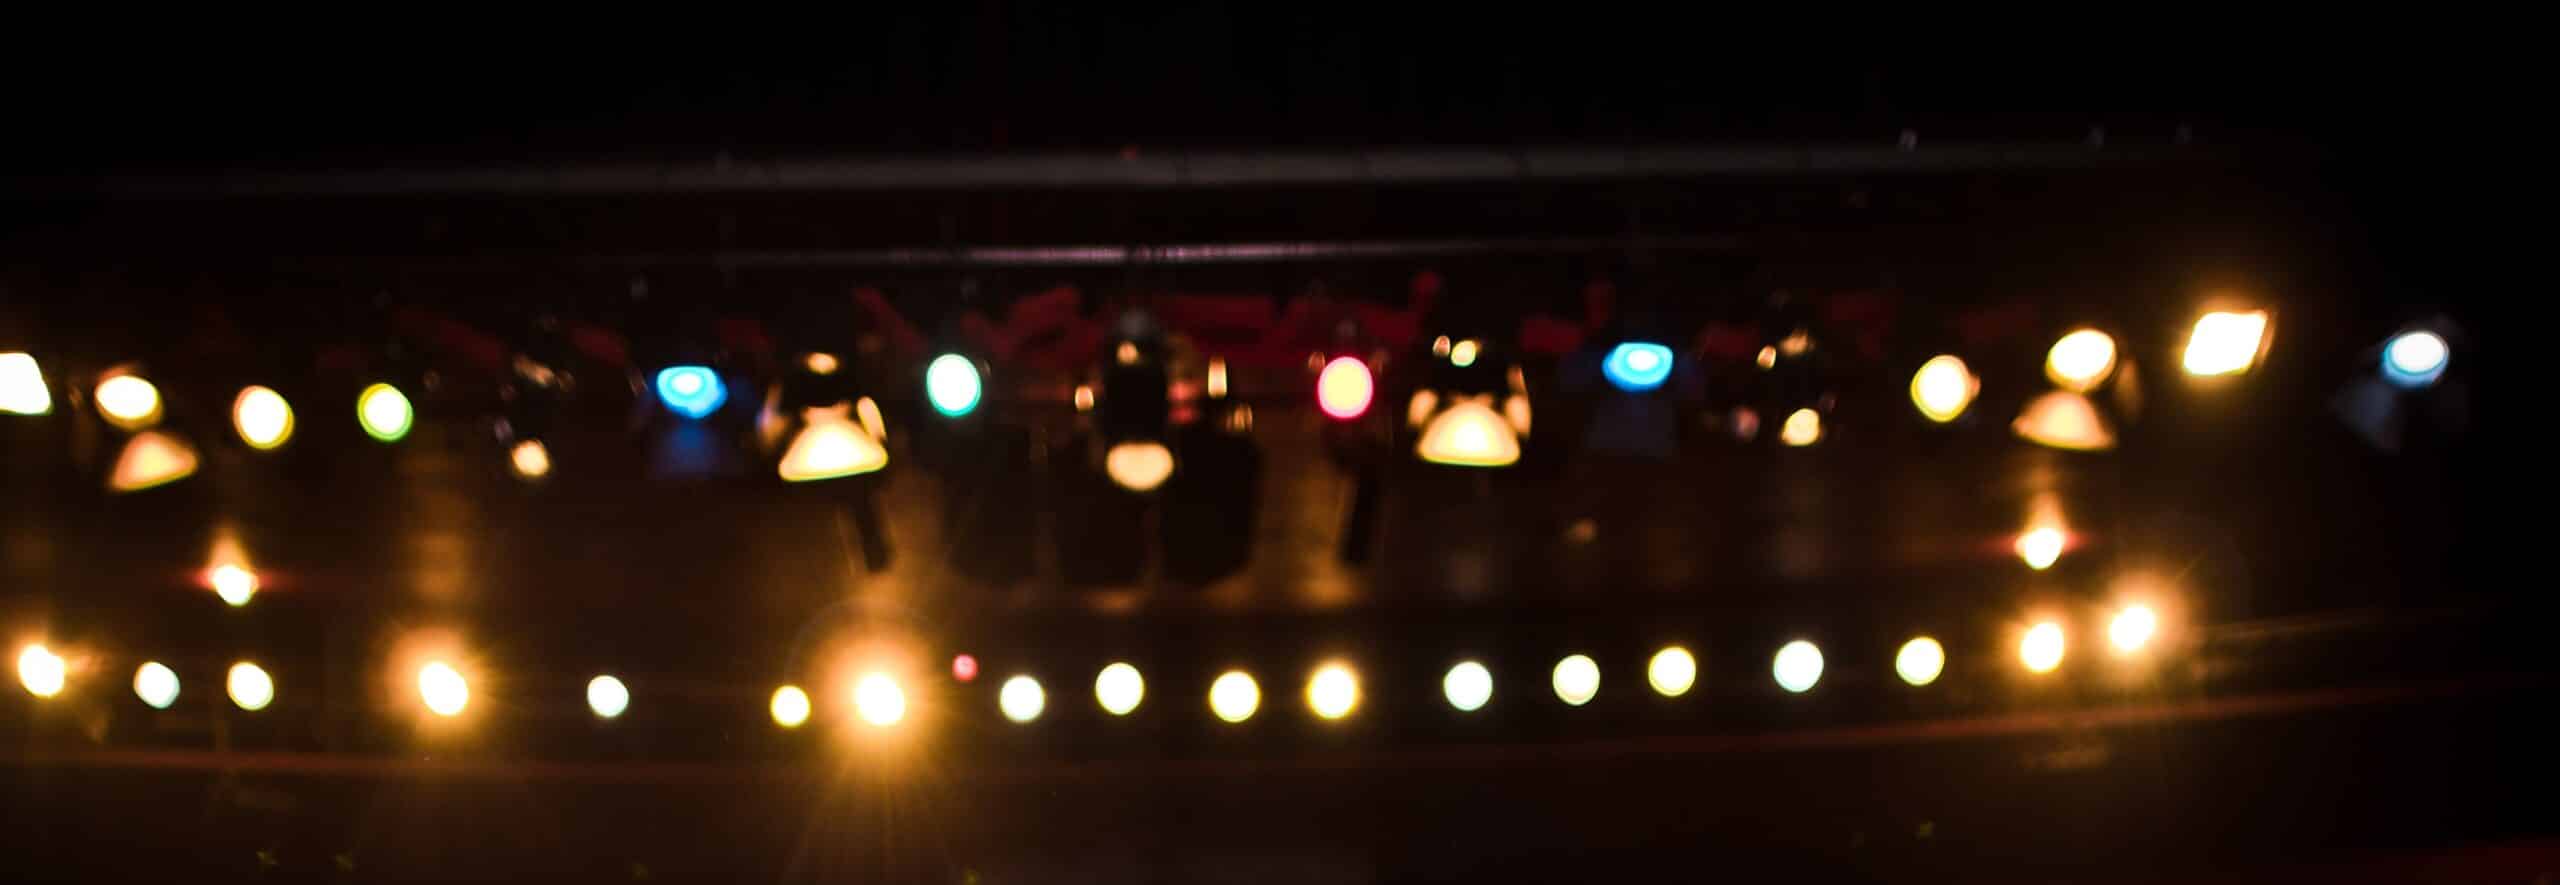 Photo of theatre lights